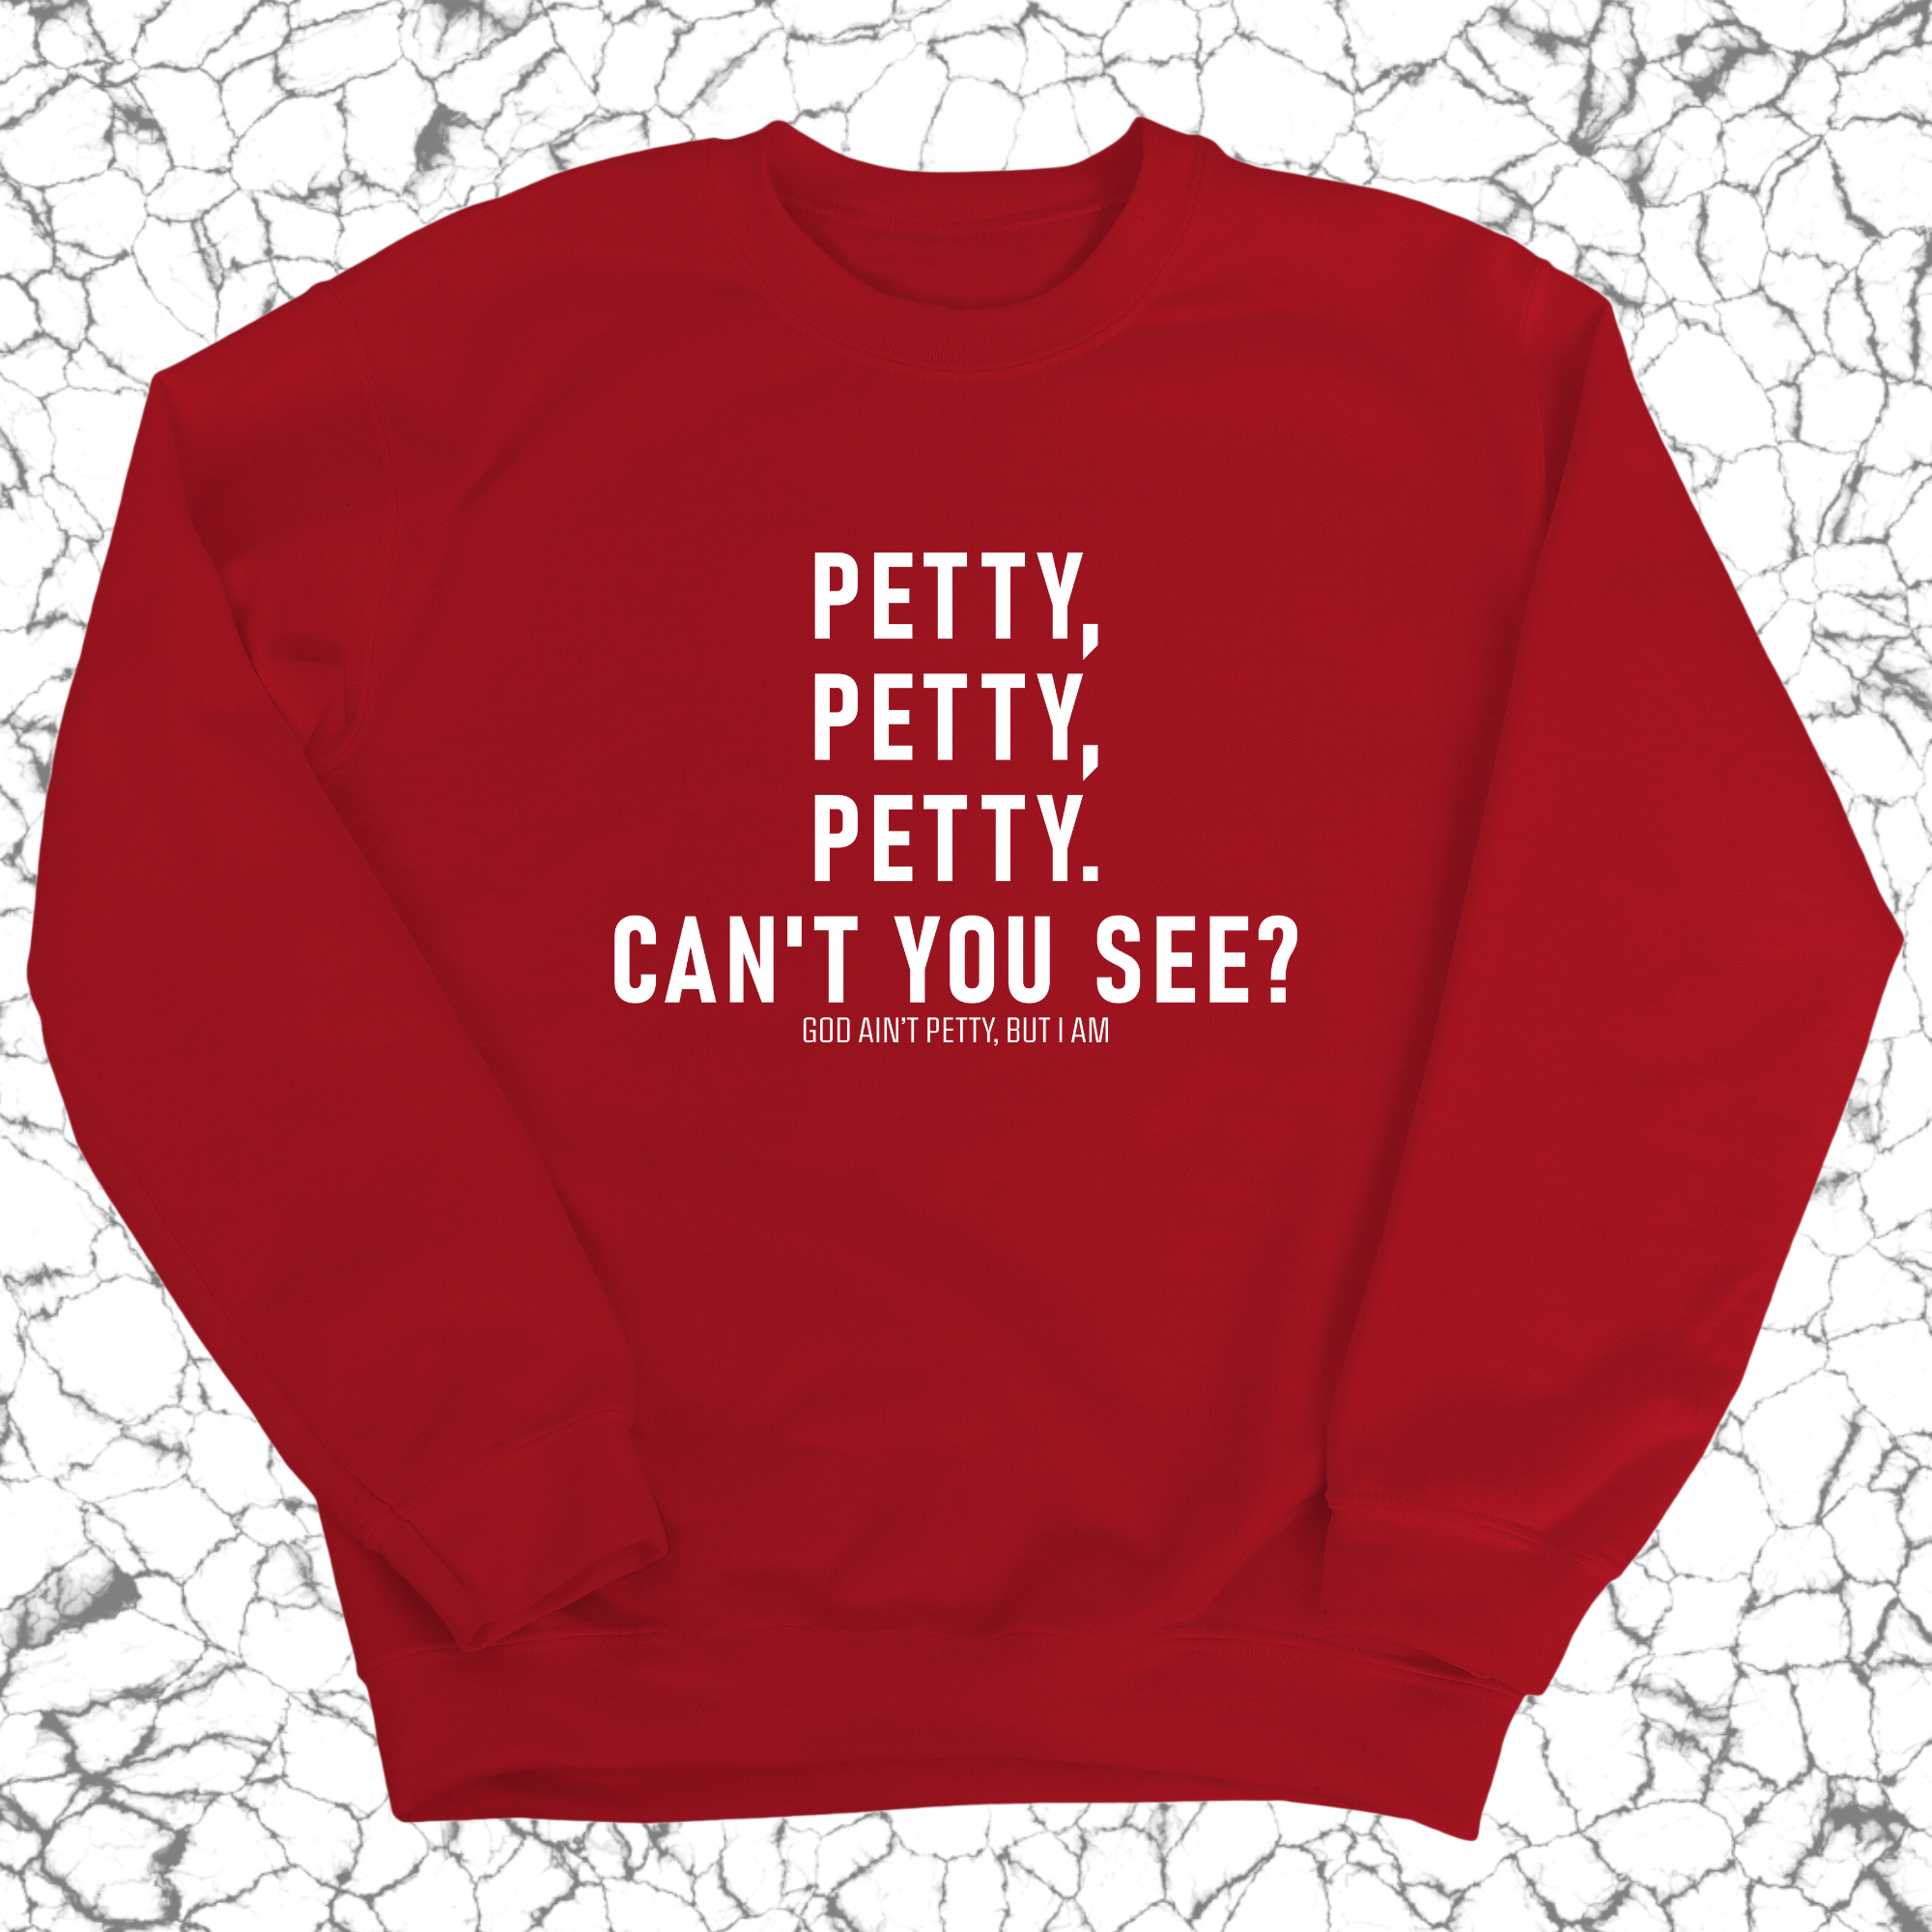 Petty, Petty, Petty. Can't you see Unisex Sweatshirt-Sweatshirt-The Original God Ain't Petty But I Am